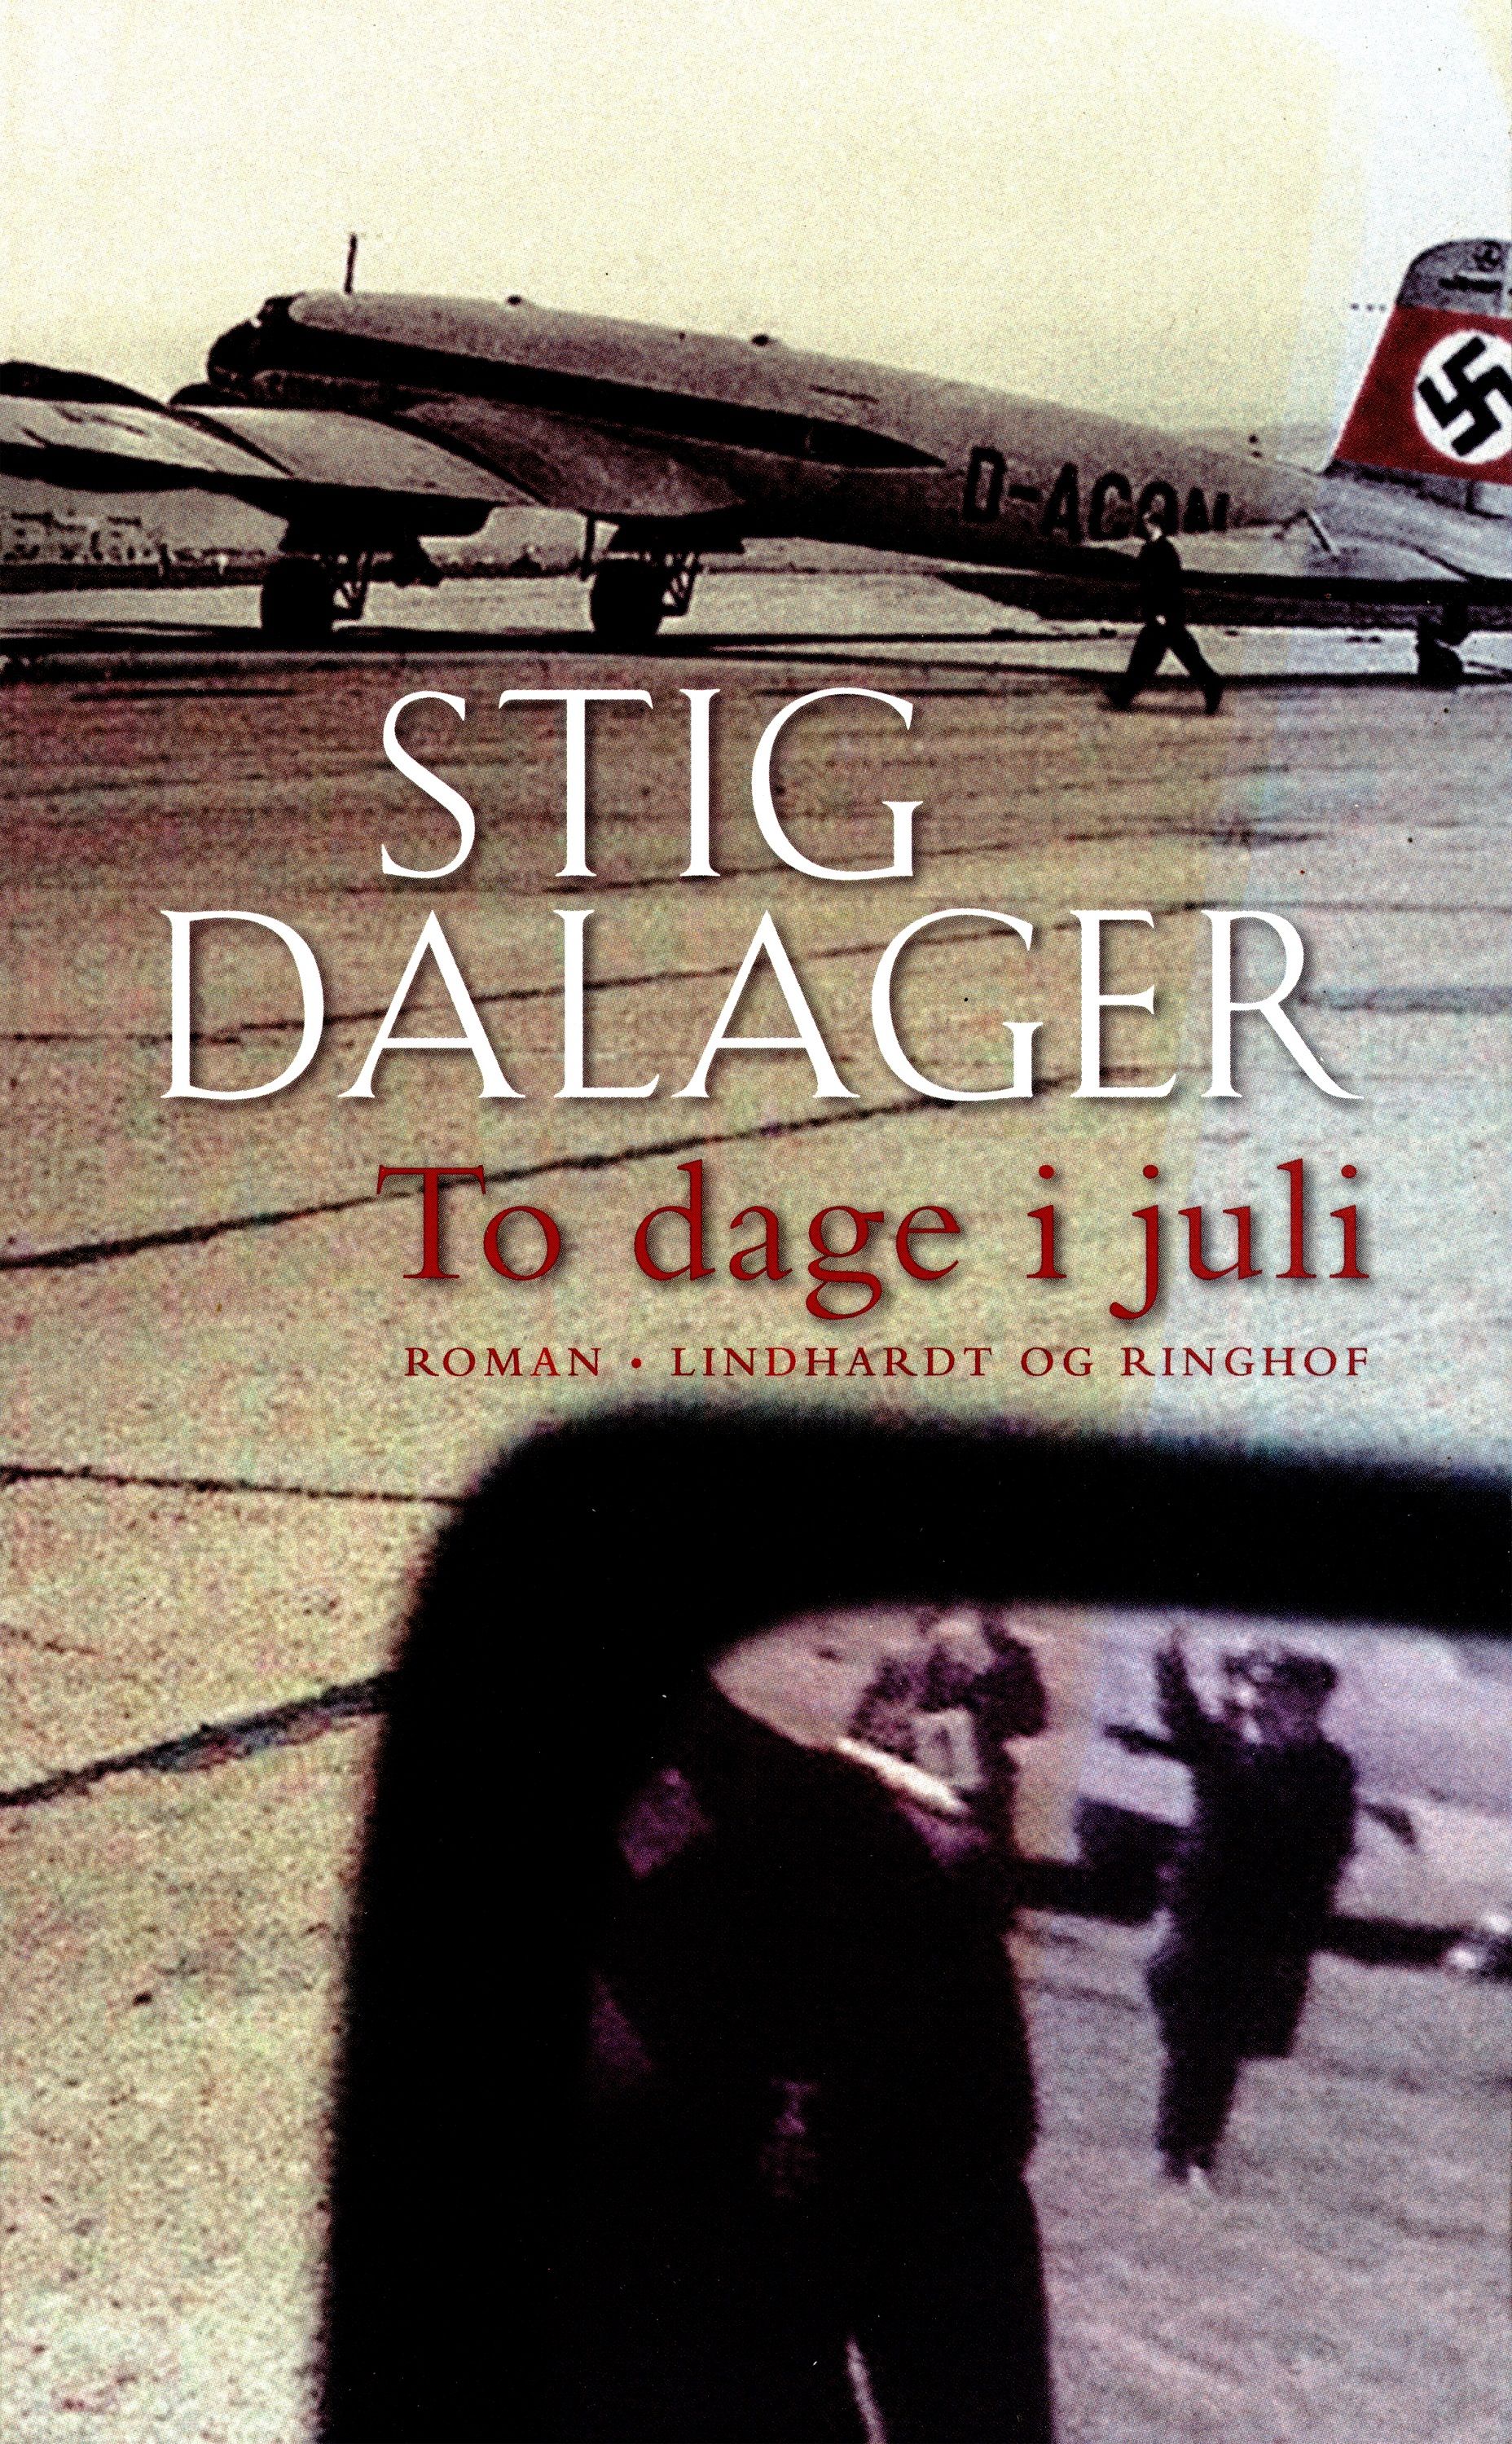 To dage i juli, audiobook by Stig Dalager